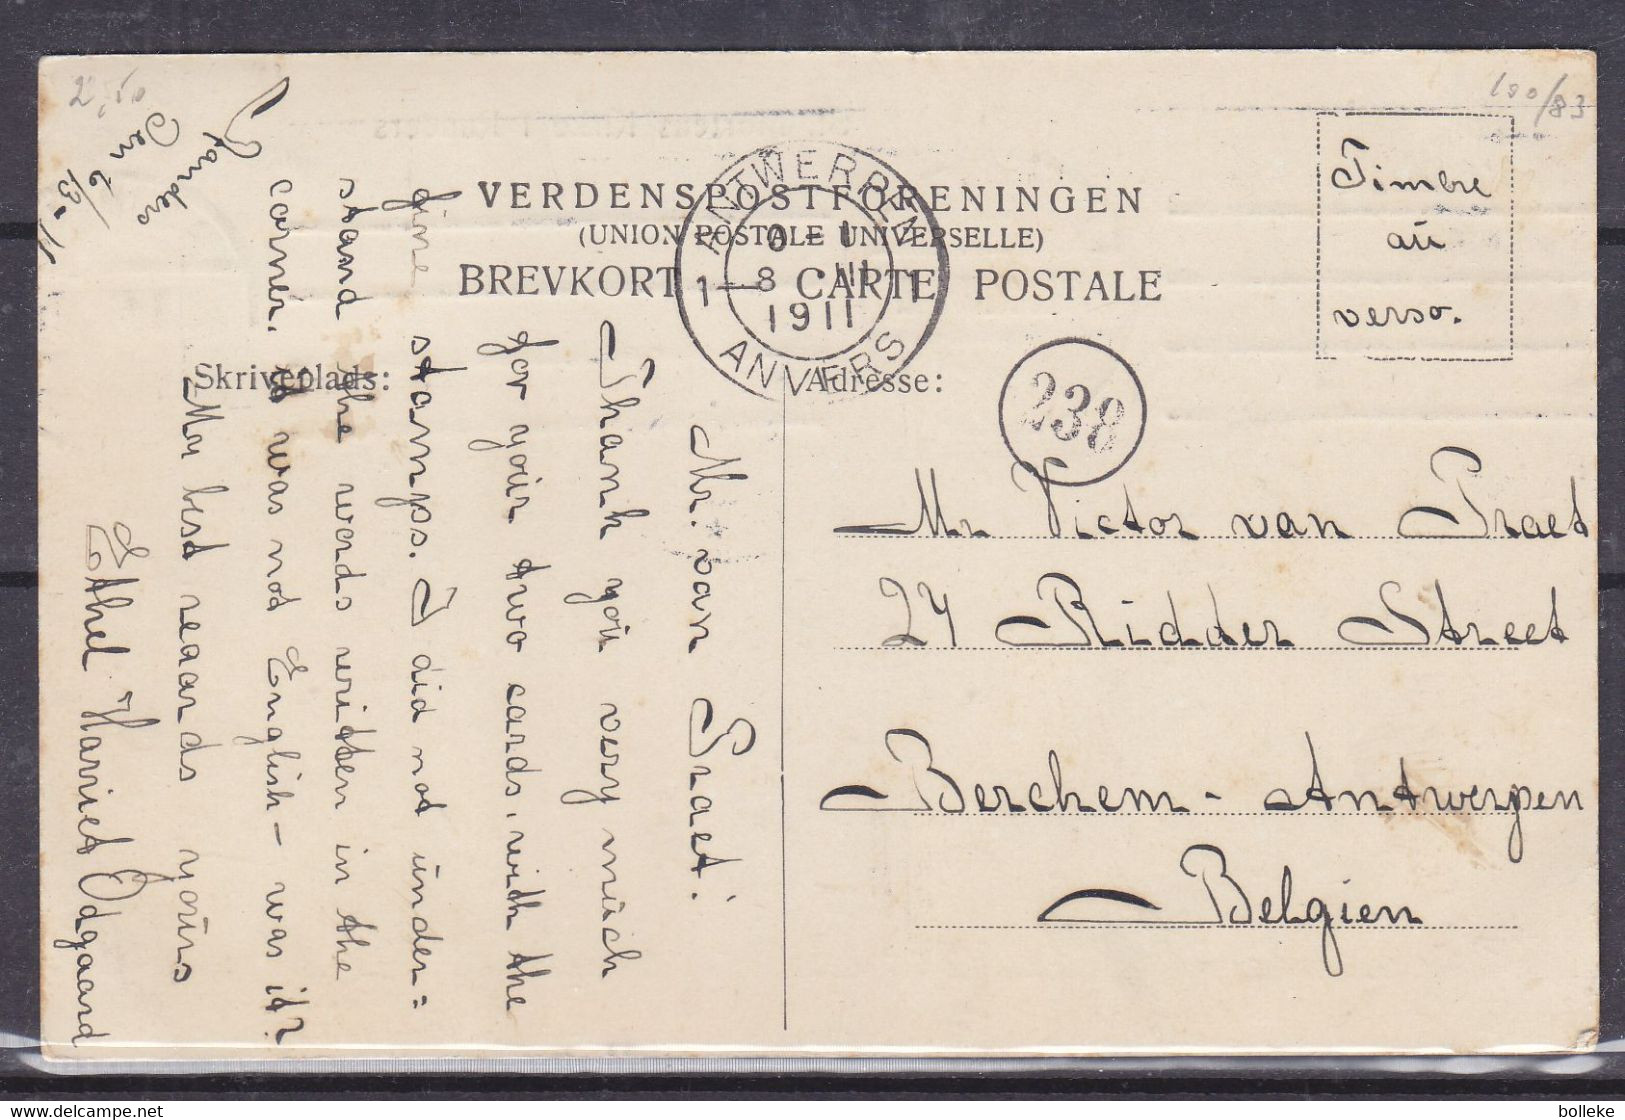 Danemark - Carte Postale De 1911 - Oblit Randers - Exp Vers Antwerpen - église - Covers & Documents